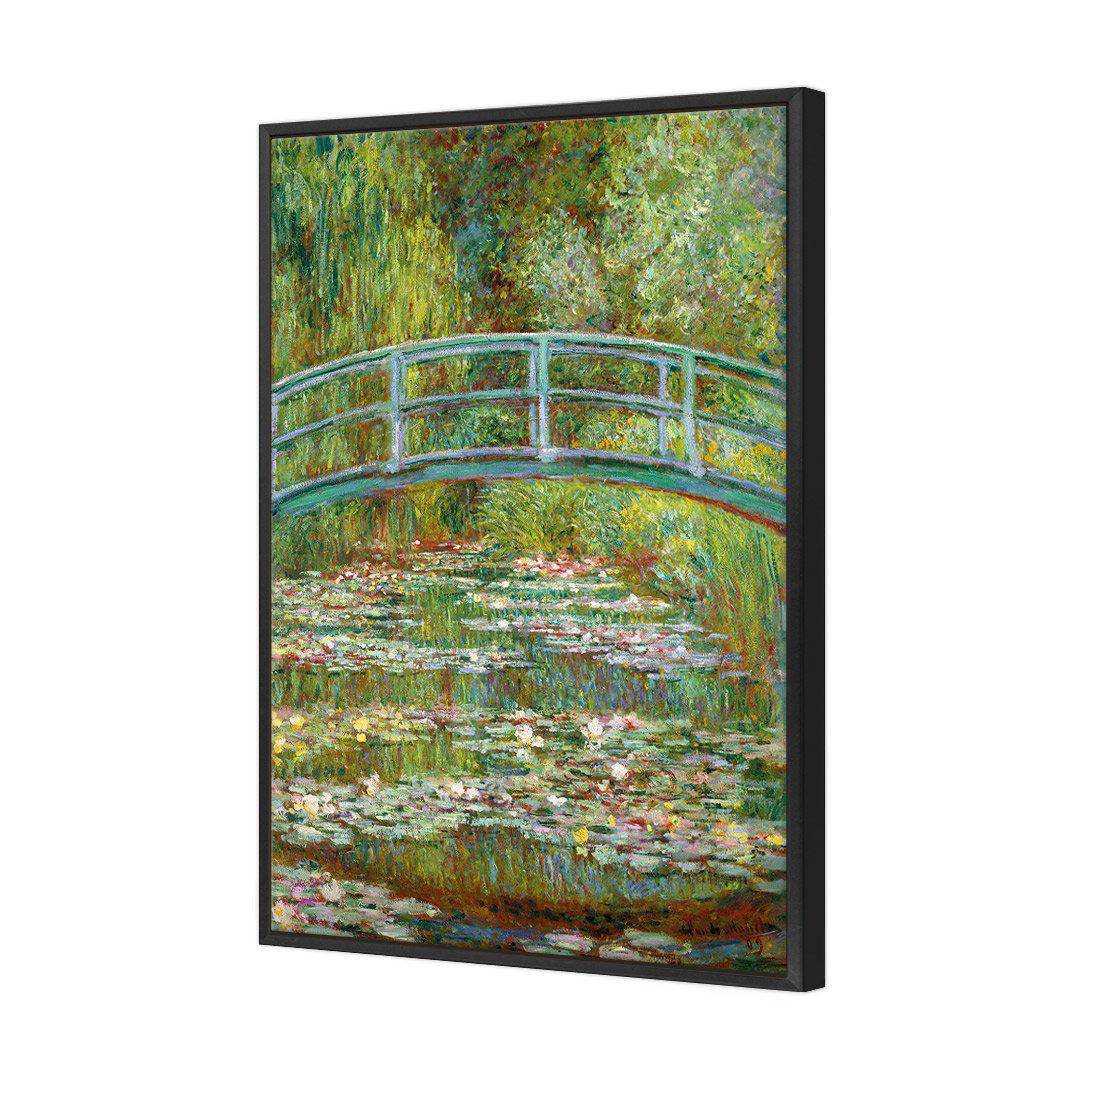 Bridge Over Rose Pond - Monet Canvas Art-Canvas-Wall Art Designs-45x30cm-Canvas - Black Frame-Wall Art Designs